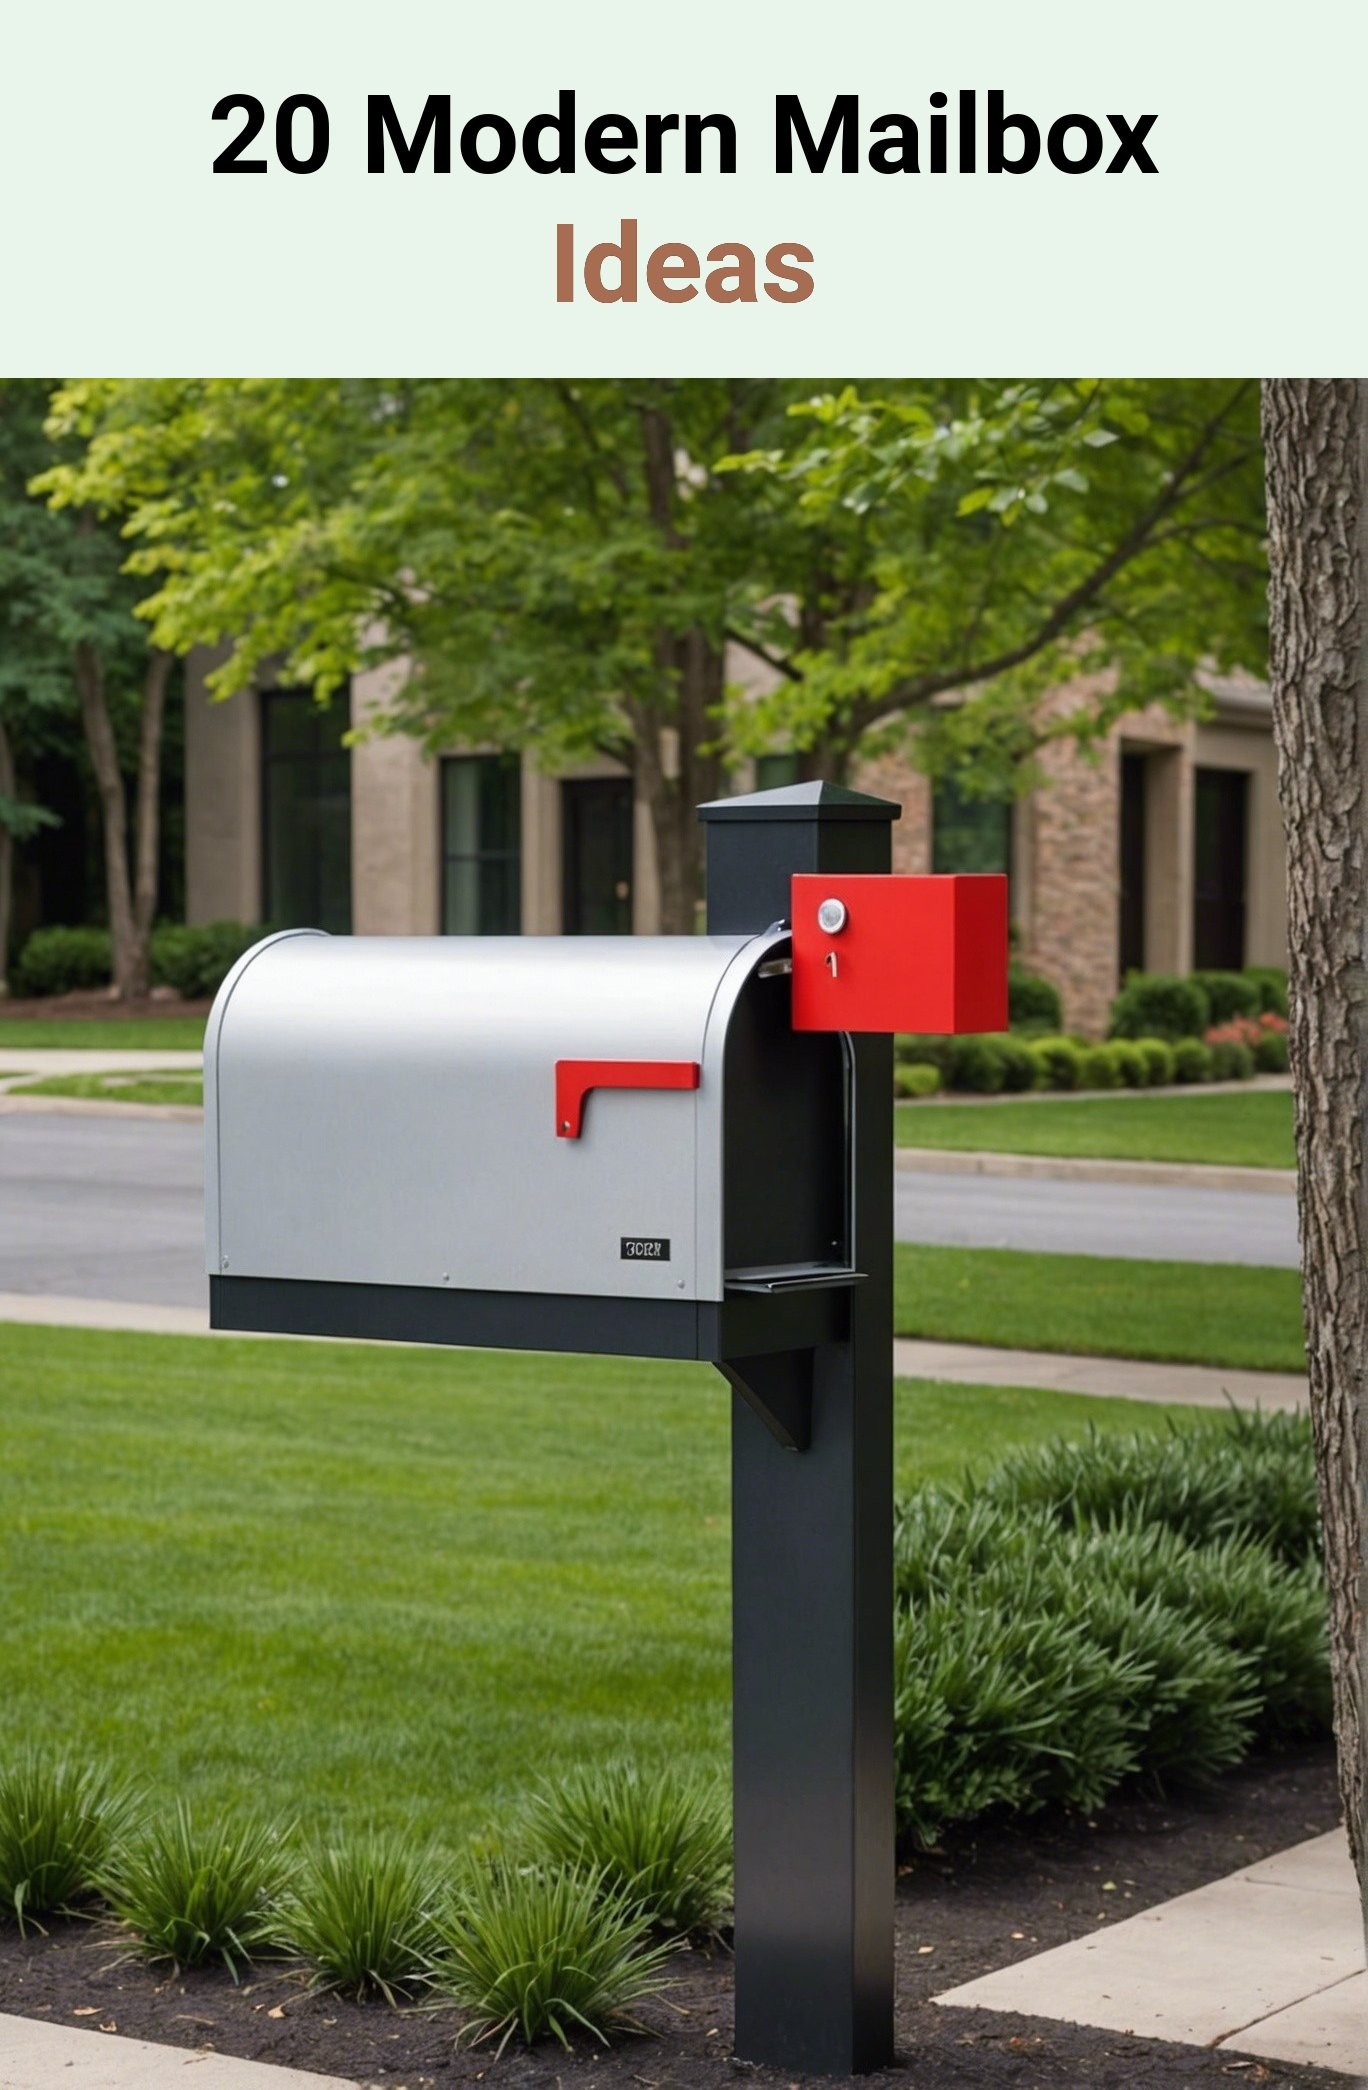 20 Modern Mailbox Ideas